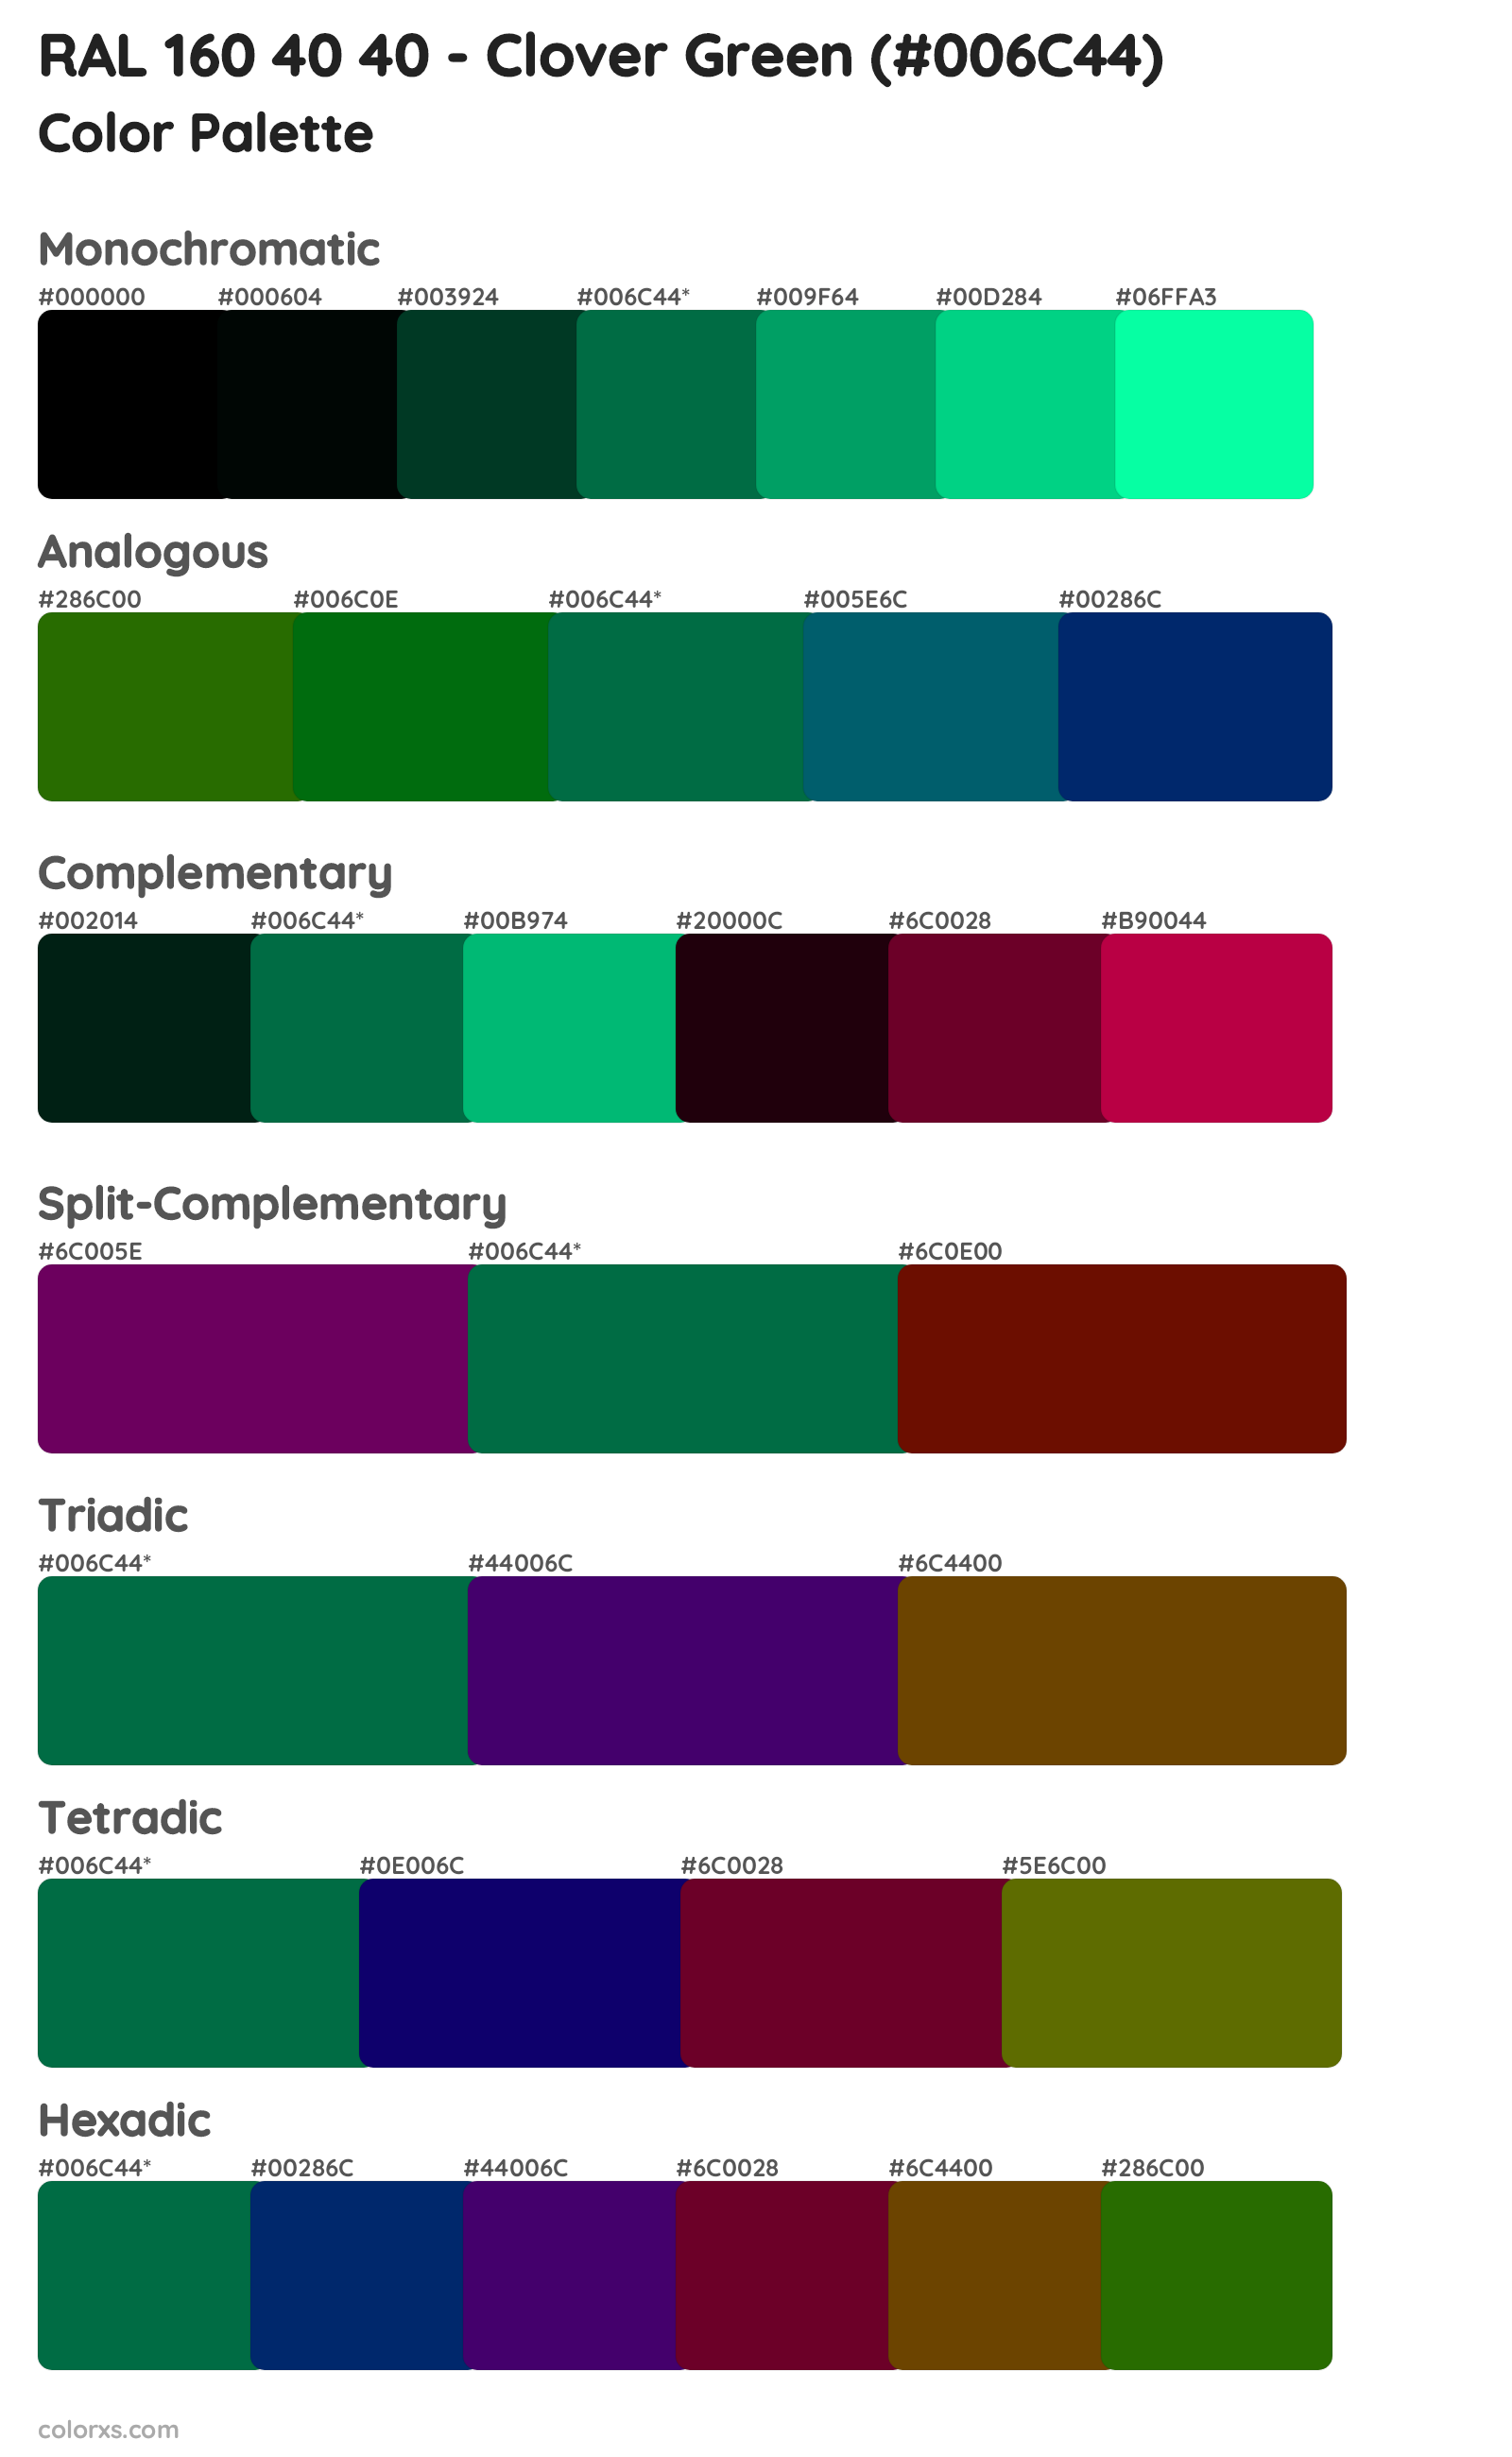 RAL 160 40 40 - Clover Green Color Scheme Palettes